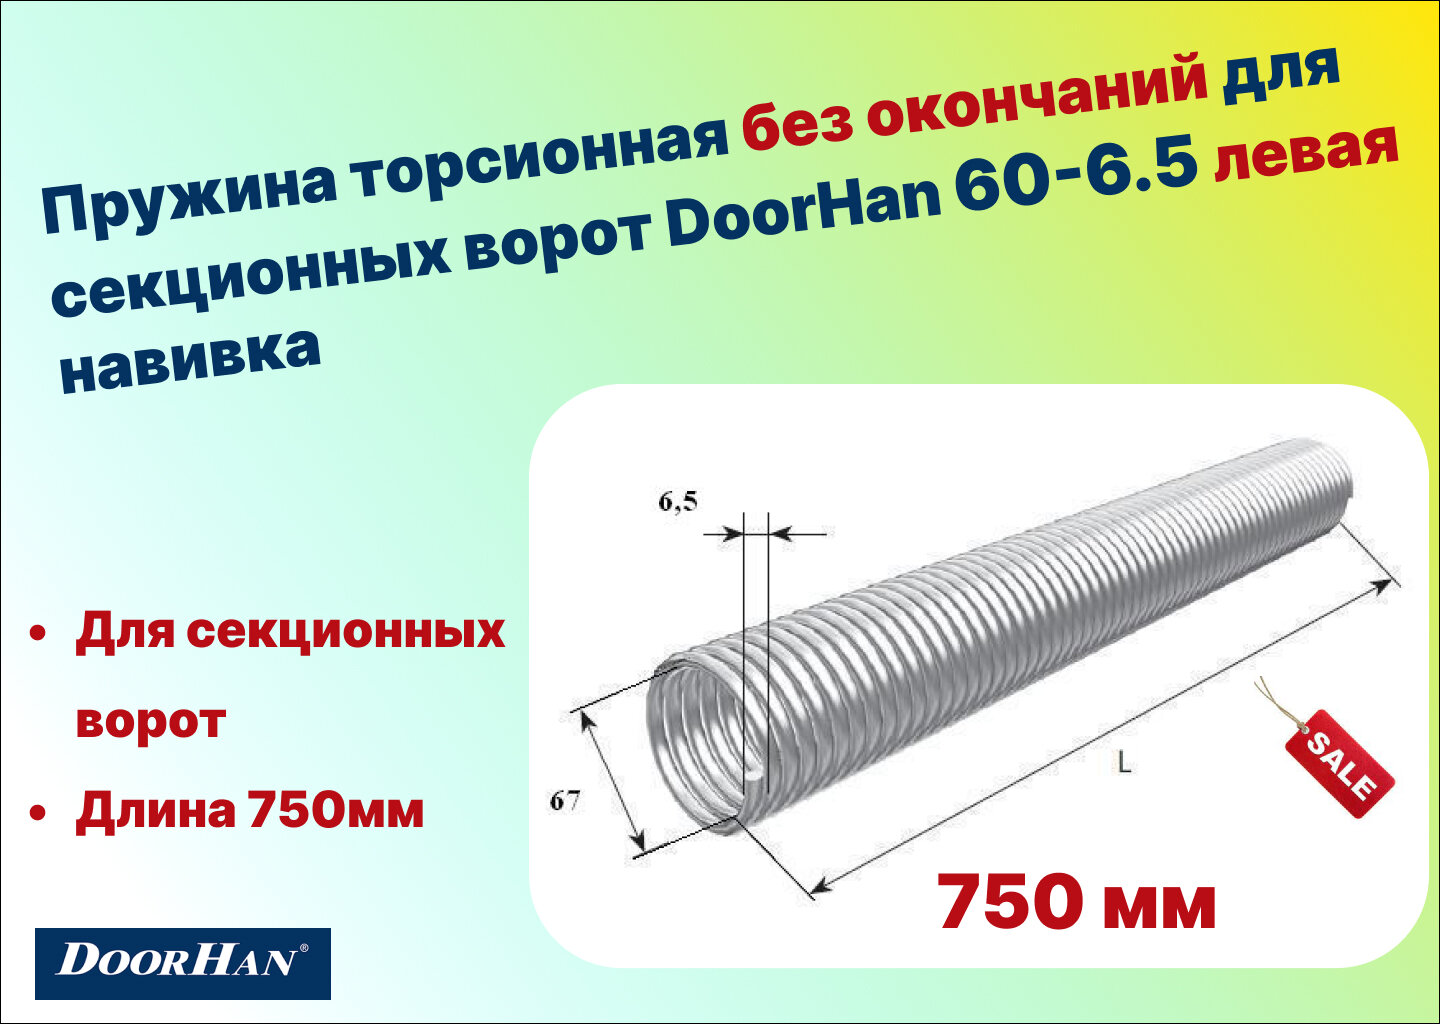 Пружина торсионная без окончаний для секционных ворот DoorHan 60-6.5 левая навивка длина 750 мм (33065/mL/RAL7004)